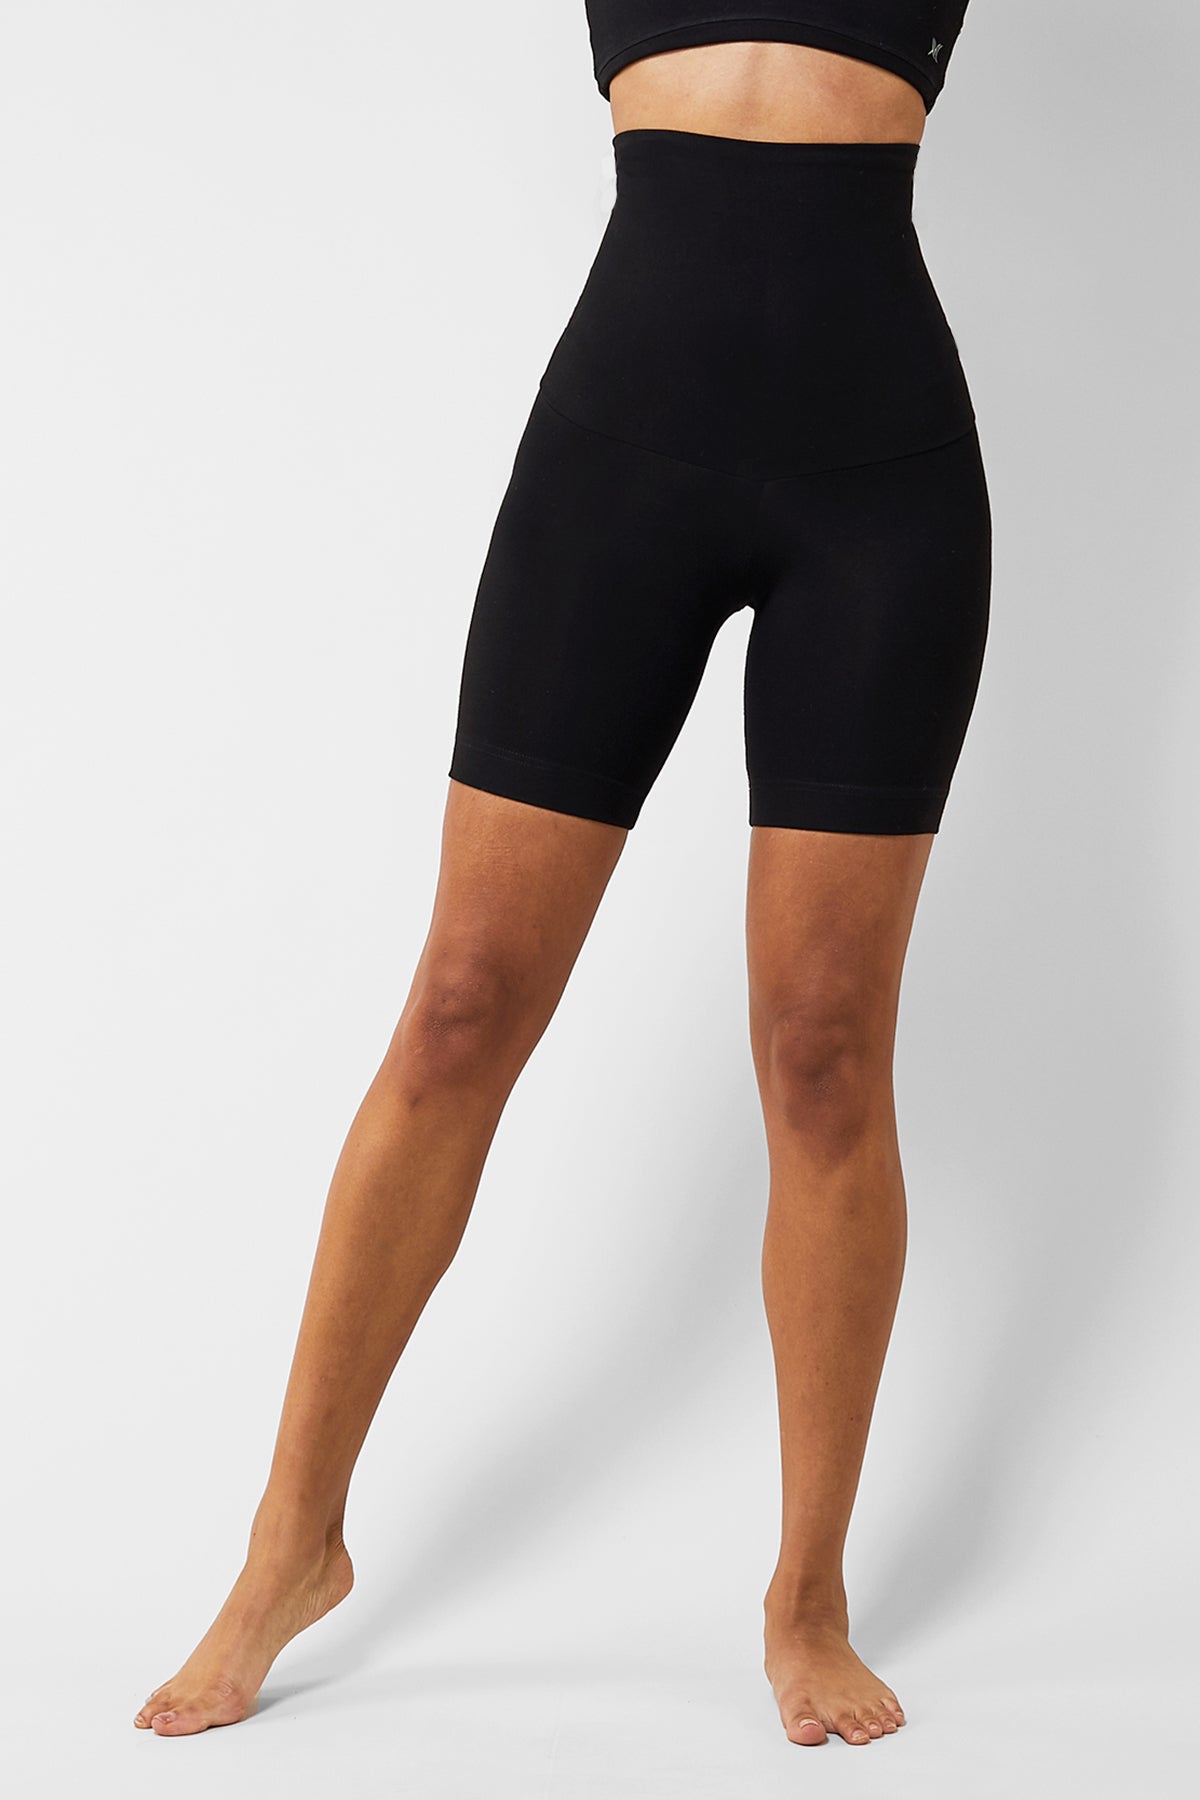 Workout Biker Shorts for Women High Waist,Tummy Control Stretchy  (Black,Size:XL)